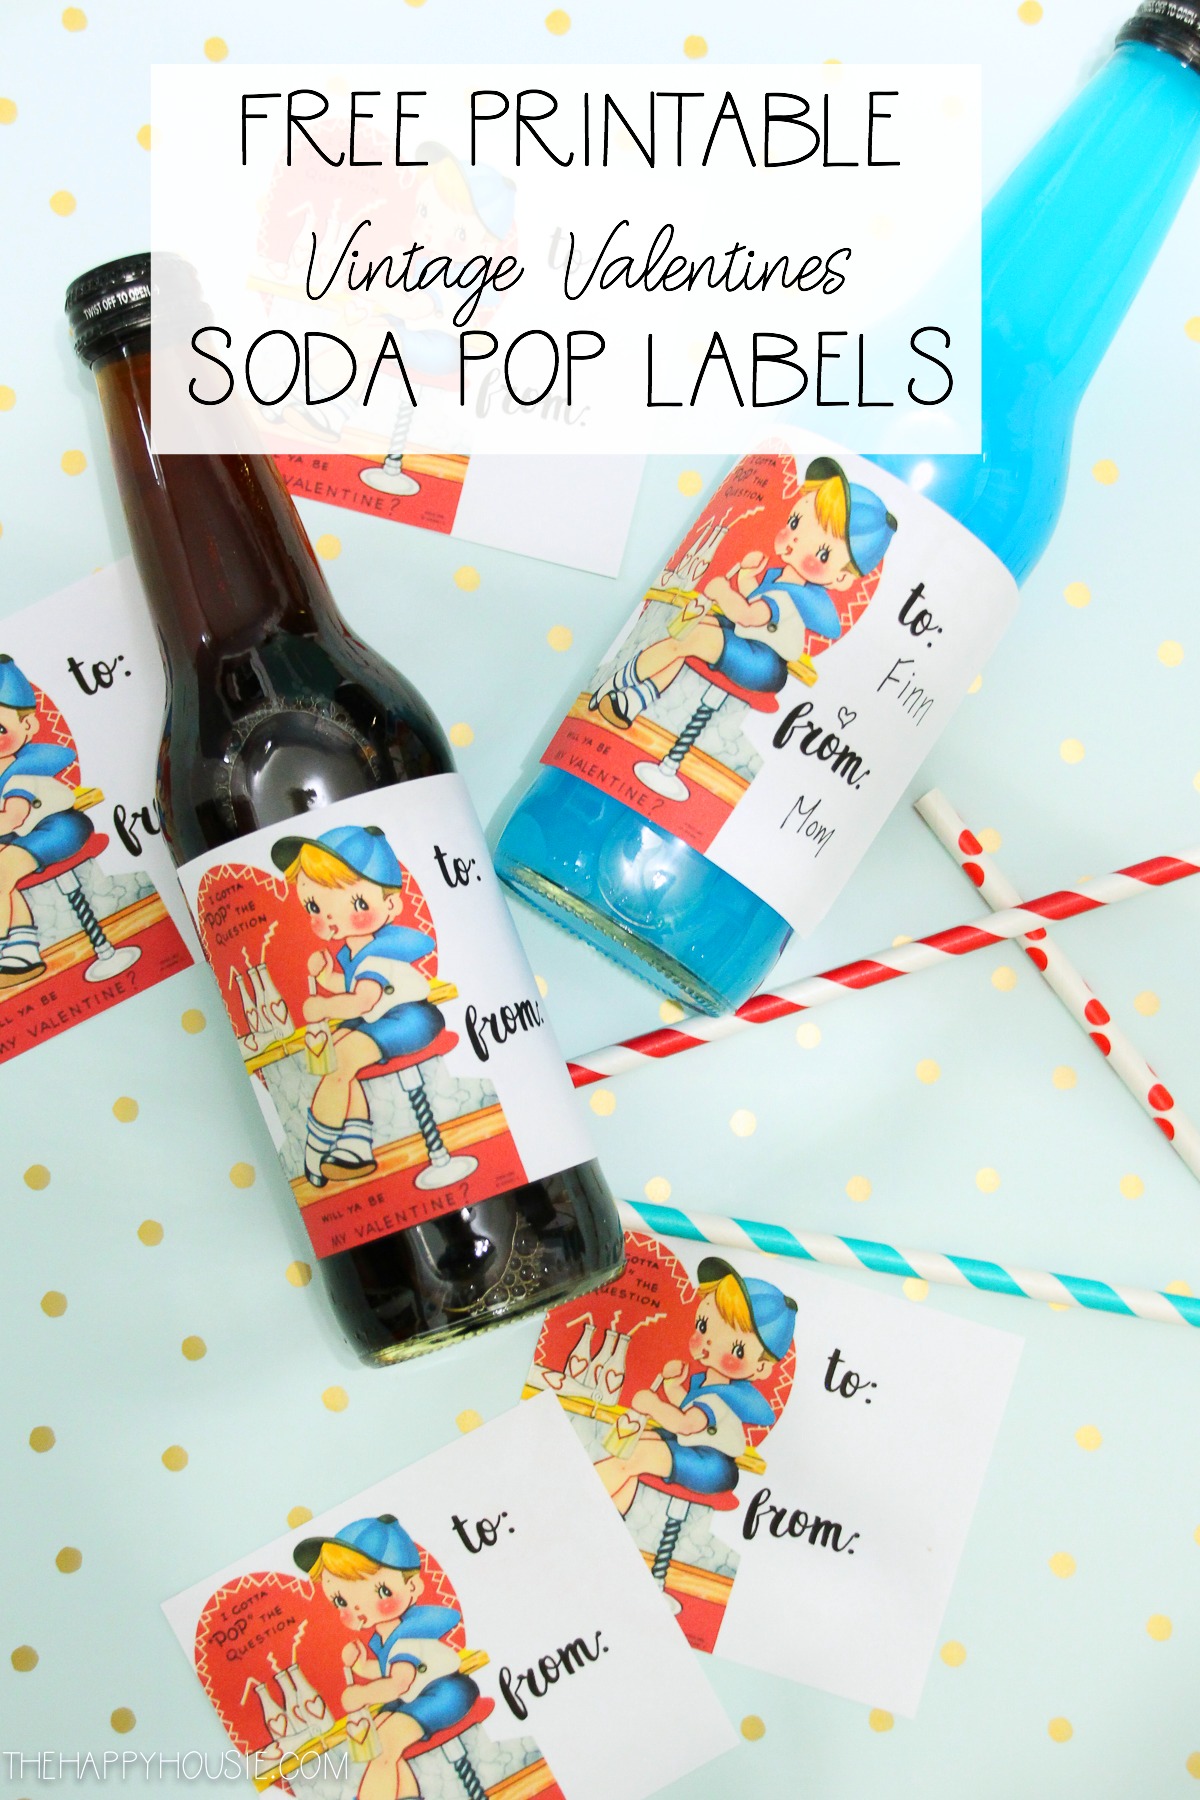 Free Printable Vintage Valentines Soda Pop Labels graphic.